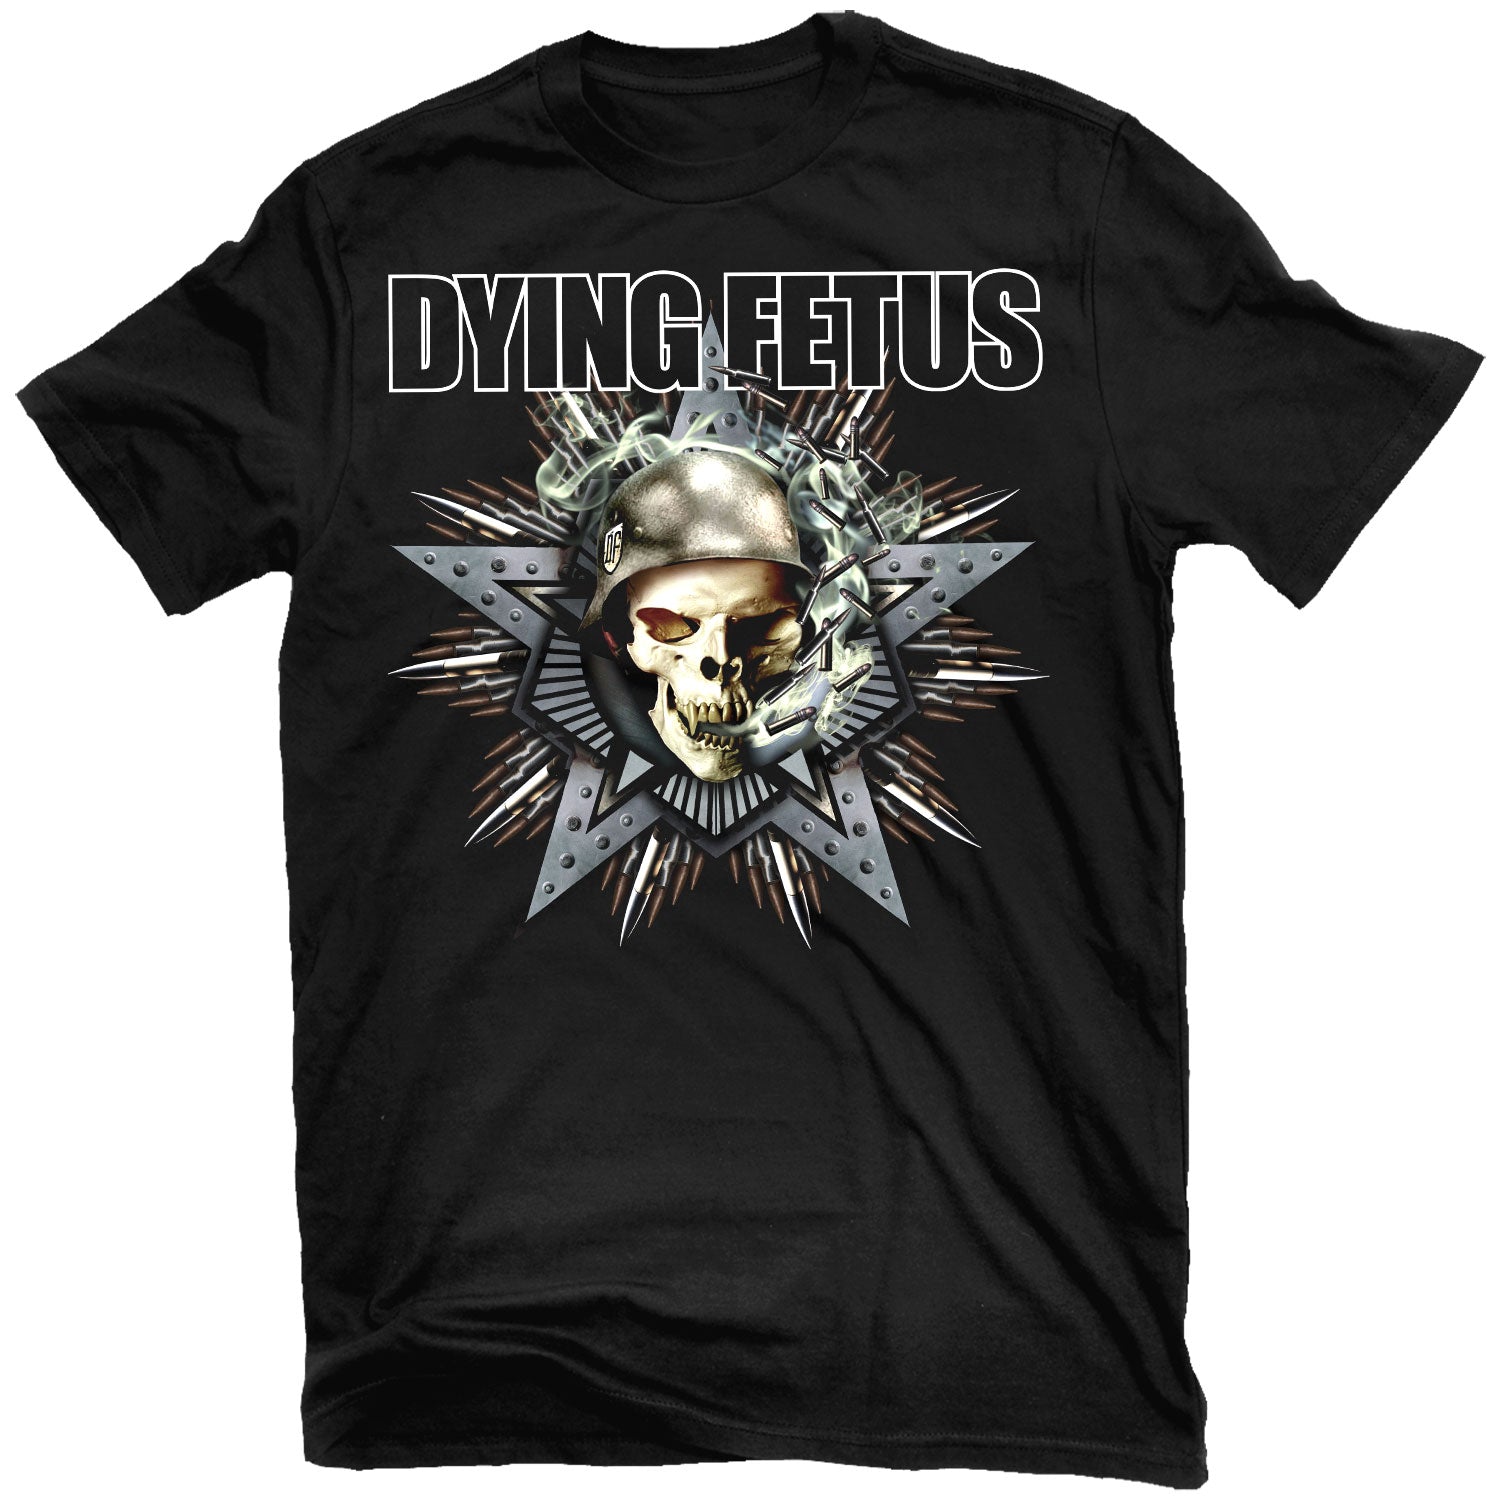 Dying Fetus "Parasites" T-Shirt